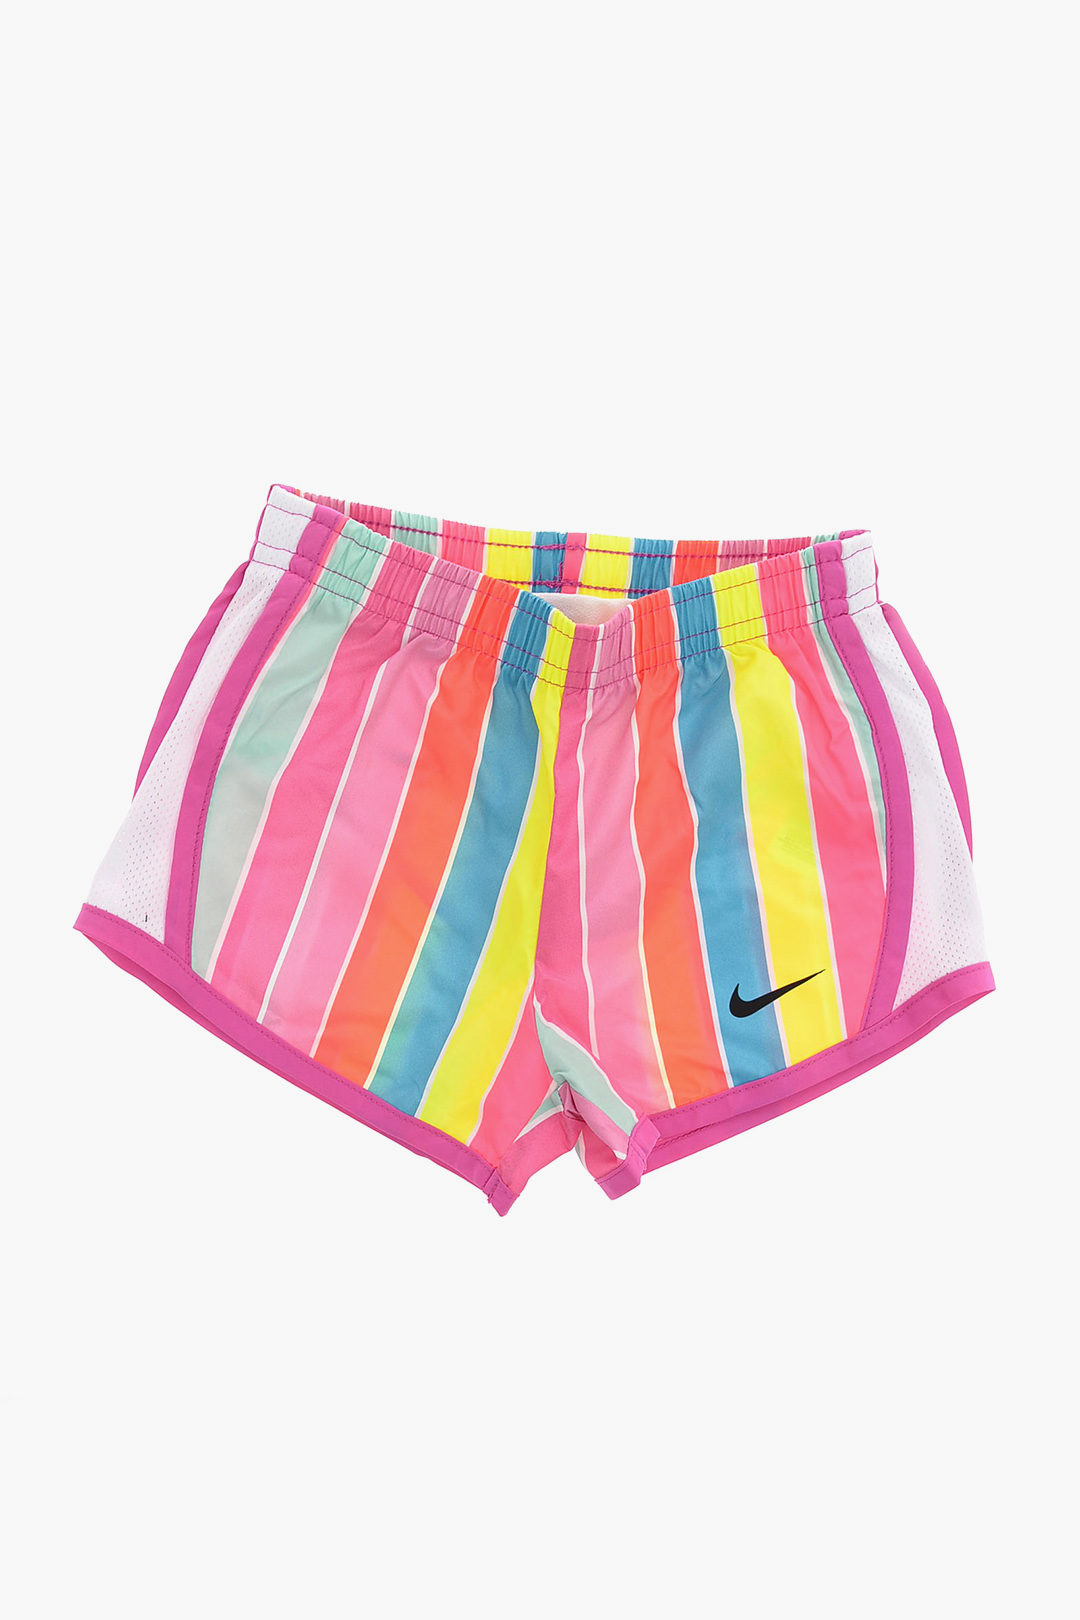 Nike KIDS Rainbow Striped Shorts girls - Glamood Outlet